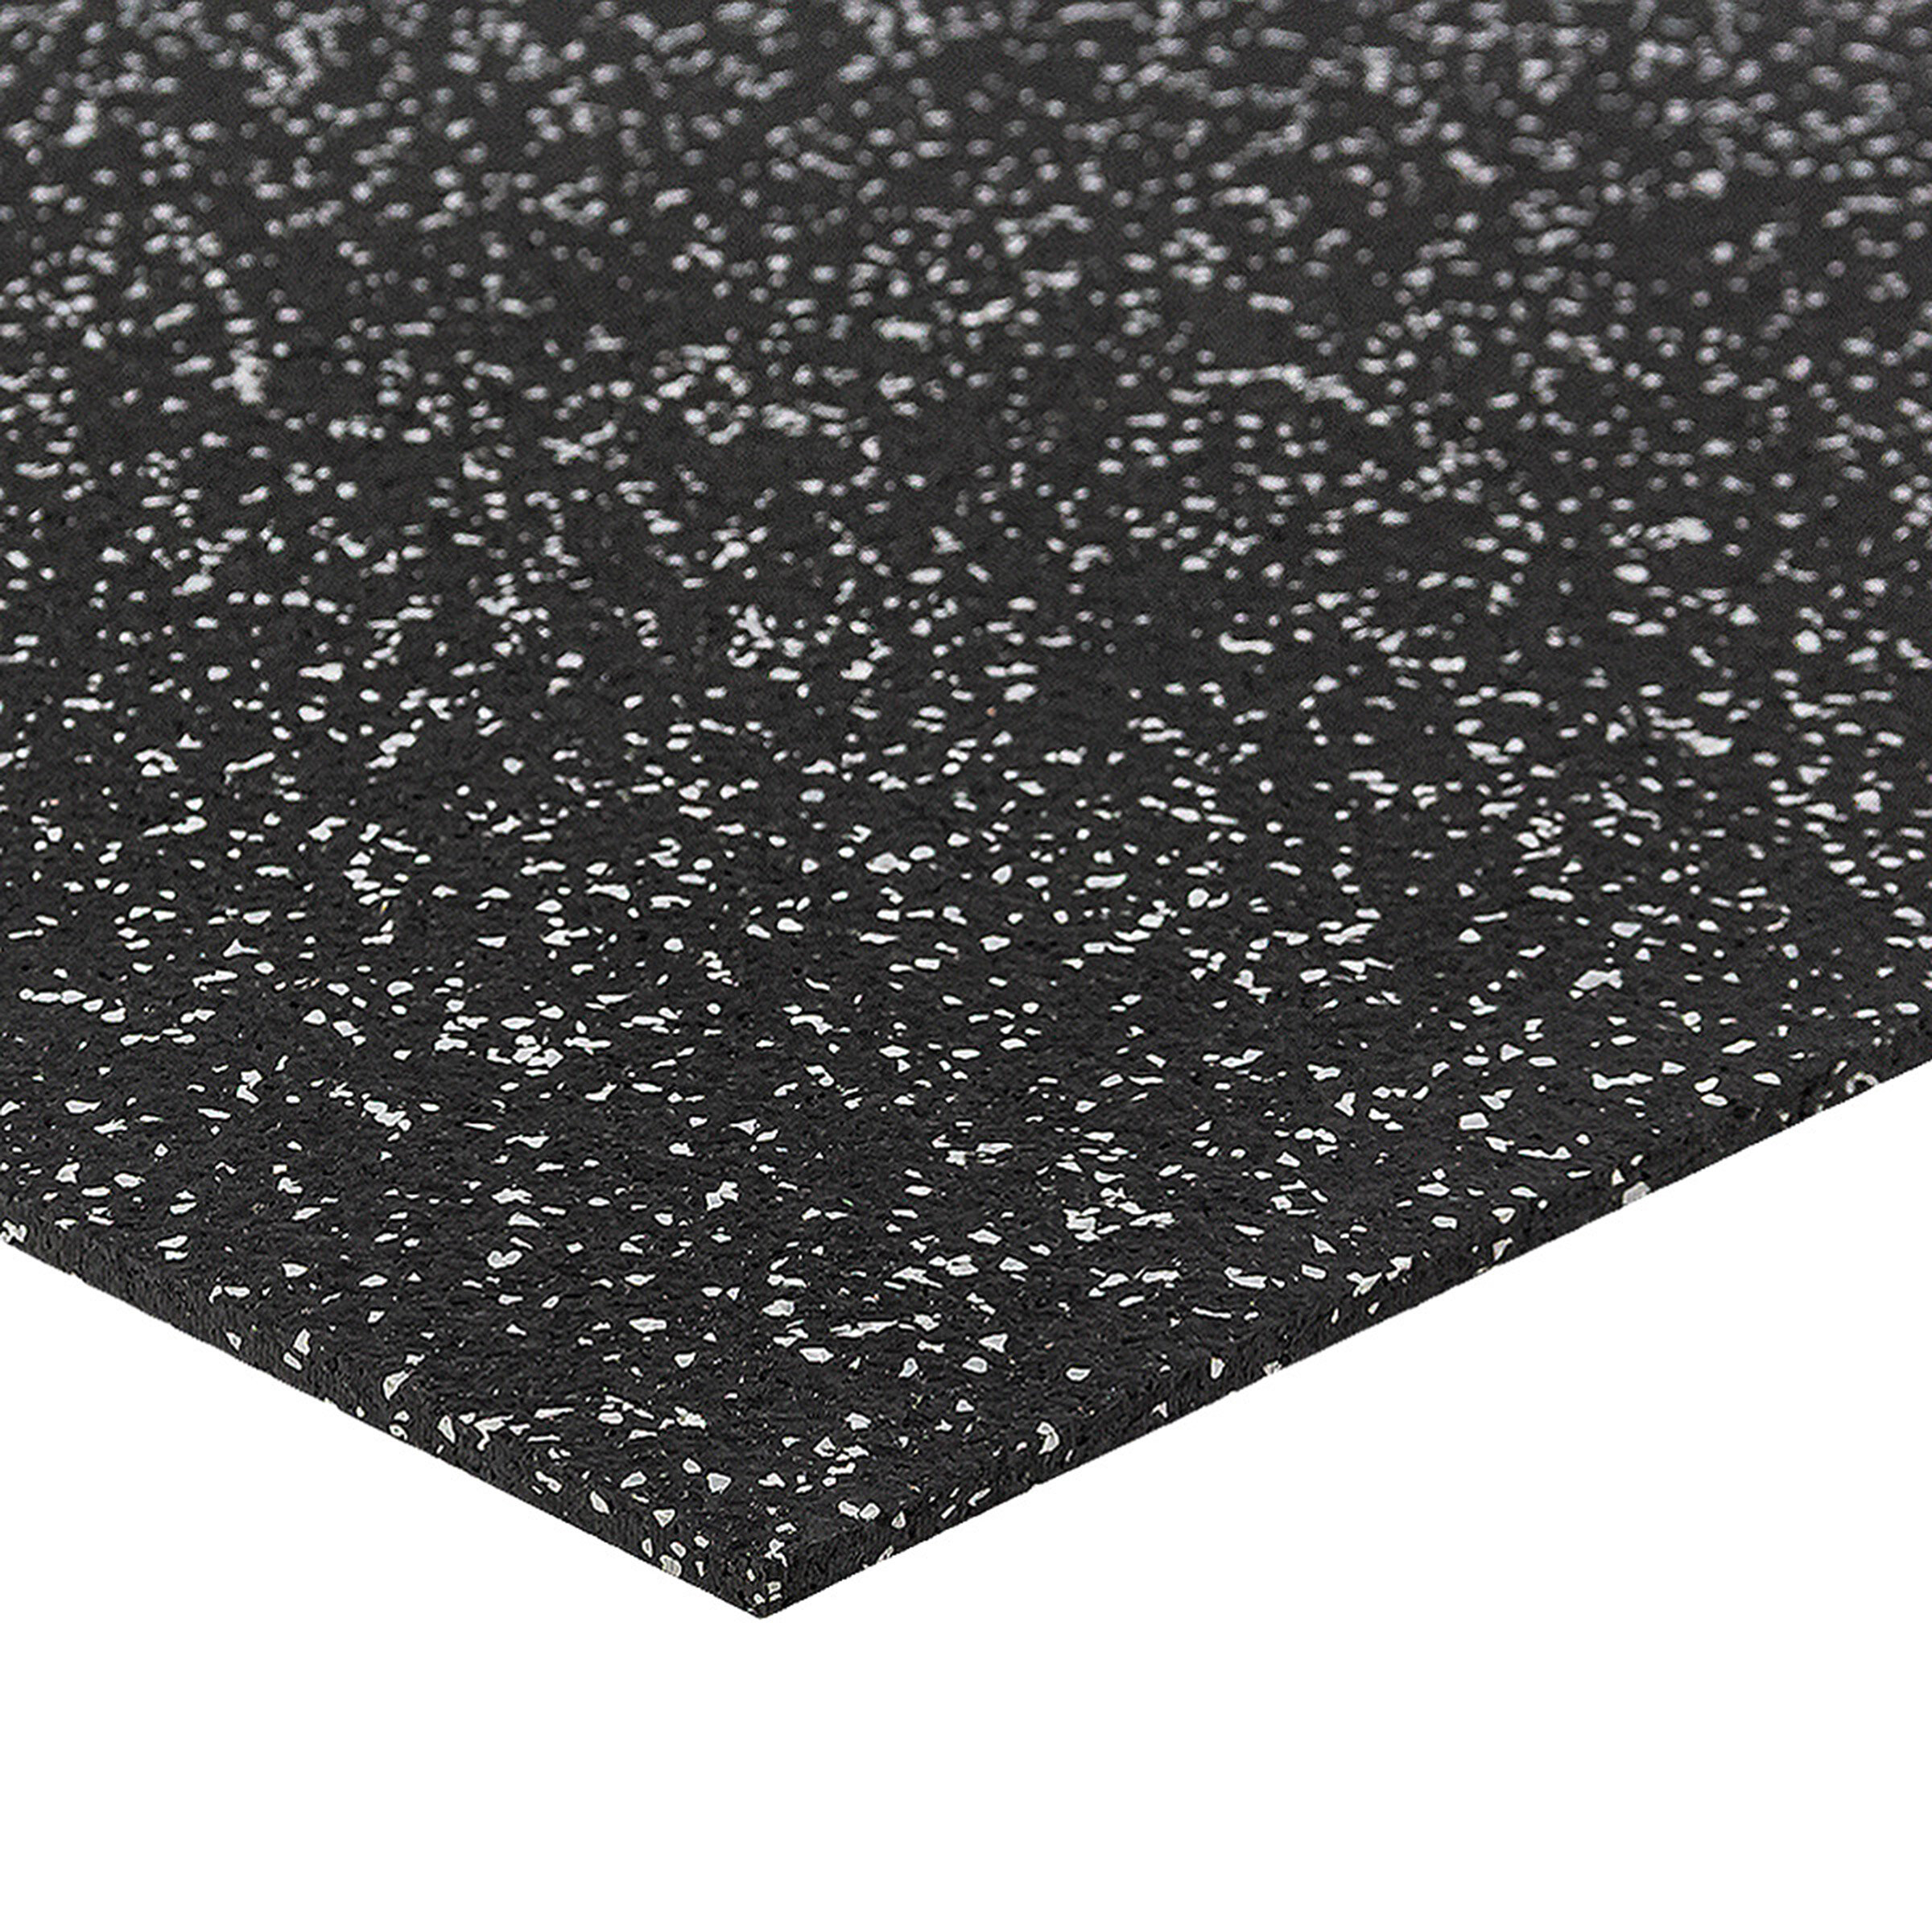 Černo-šedá podlahová guma (puzzle - střed) FLOMA FitFlo SF1050 - délka 50 cm, šířka 50 cm, výška 0,8 cm